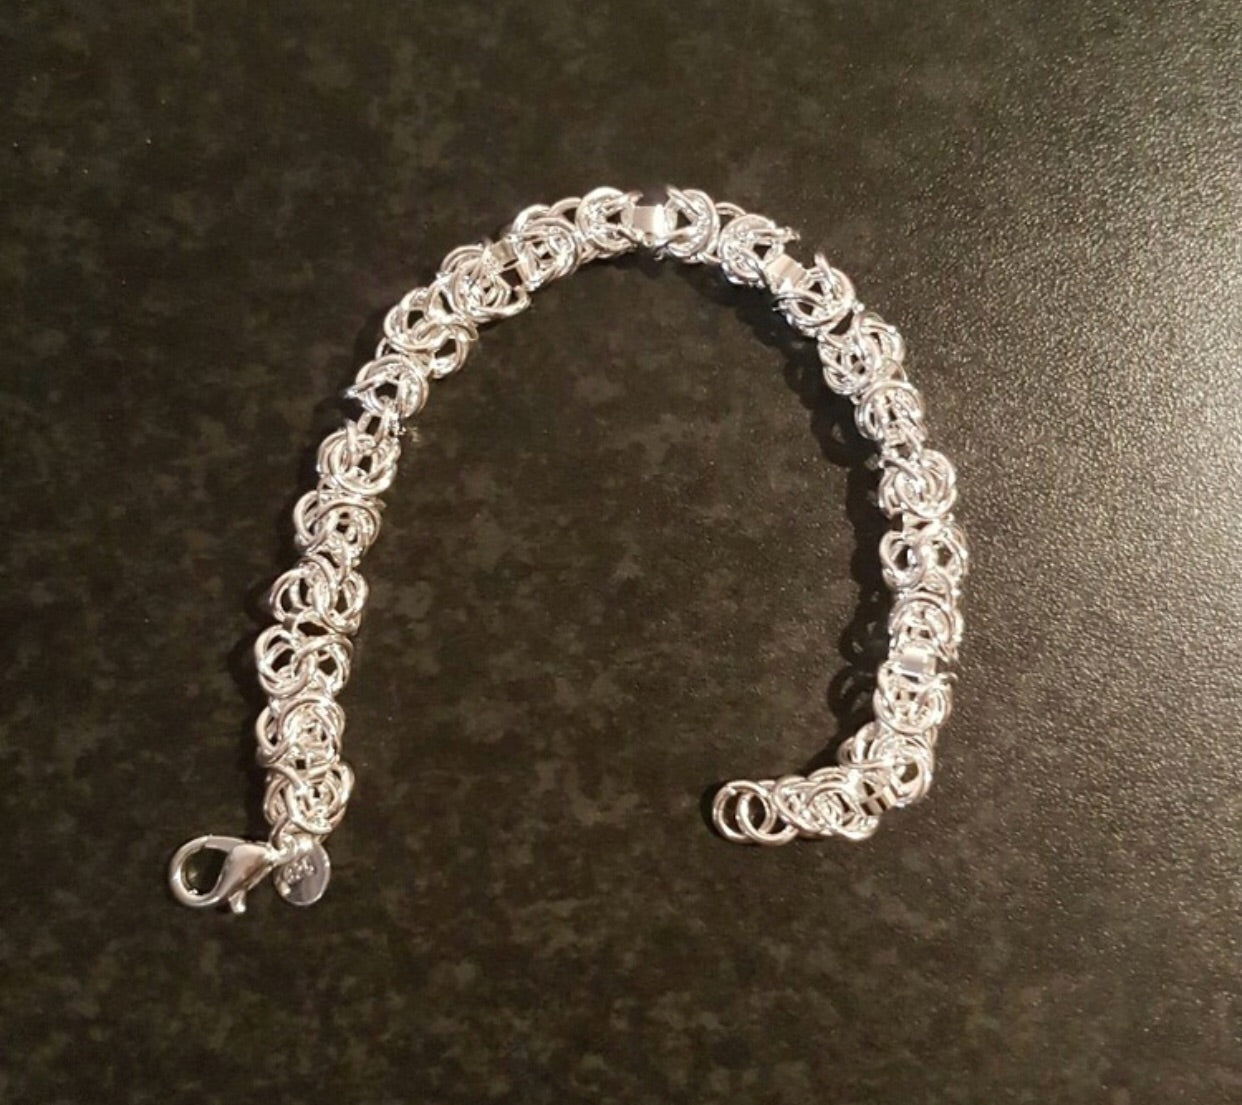 Silver Classic Bracelet